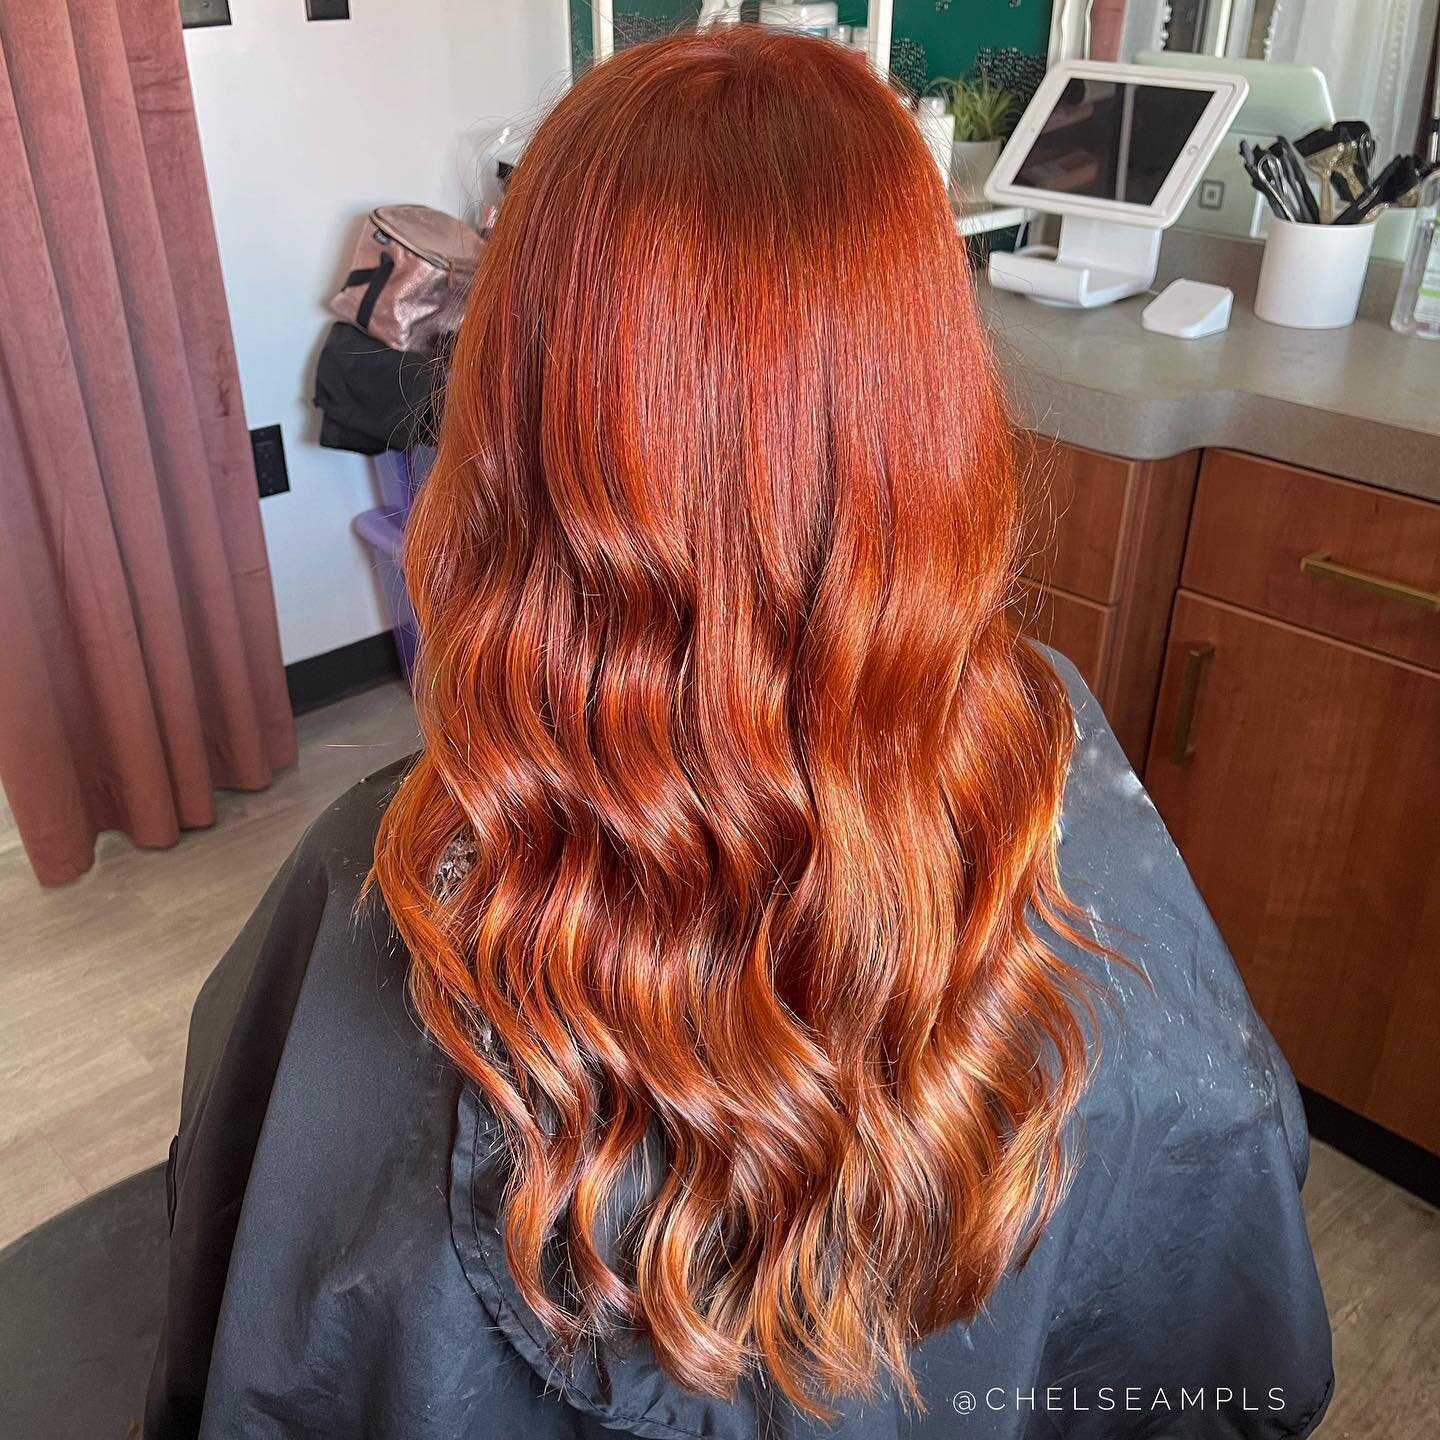 🔥Gorgeous🔥 if I do say so myself. #olaplex #wellahair #mpls #mplshair #minneapolishairstylist #mnhair #minnesotahairstylist #chelseampls #chelseamplshair #uptownminneapolis #hairstylist #redhair #fire #redhead